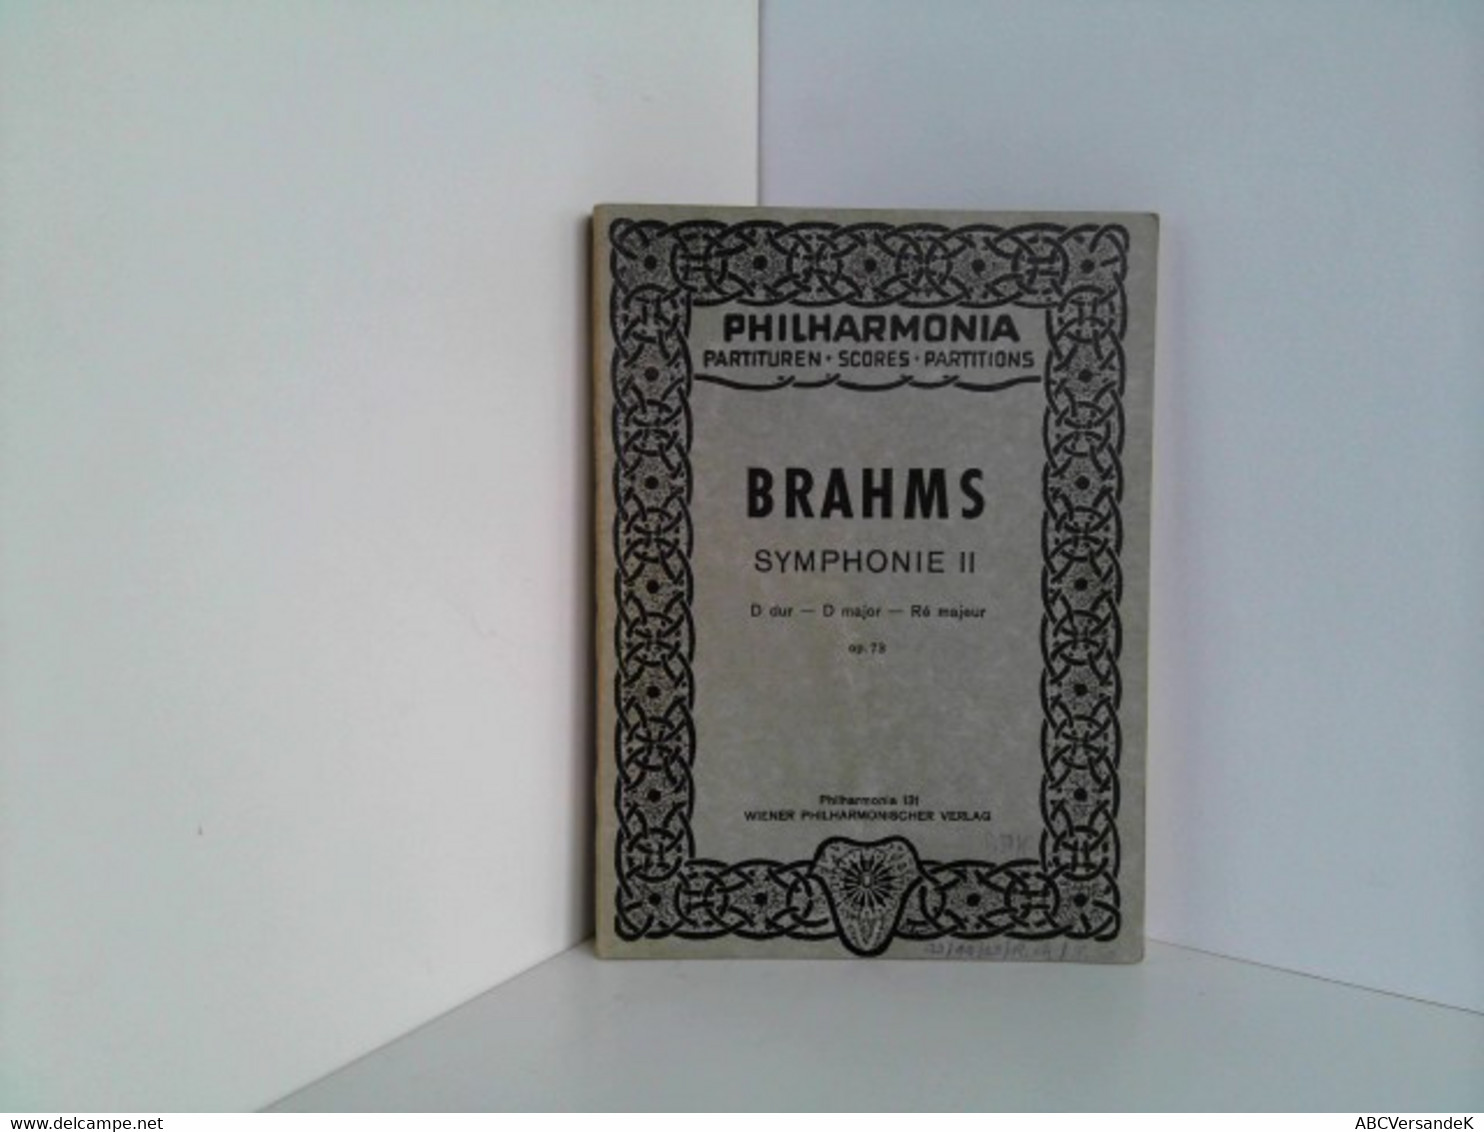 Brahms Symphonie II (D Dur Op.73) - Philharmonia No. 131. - Music